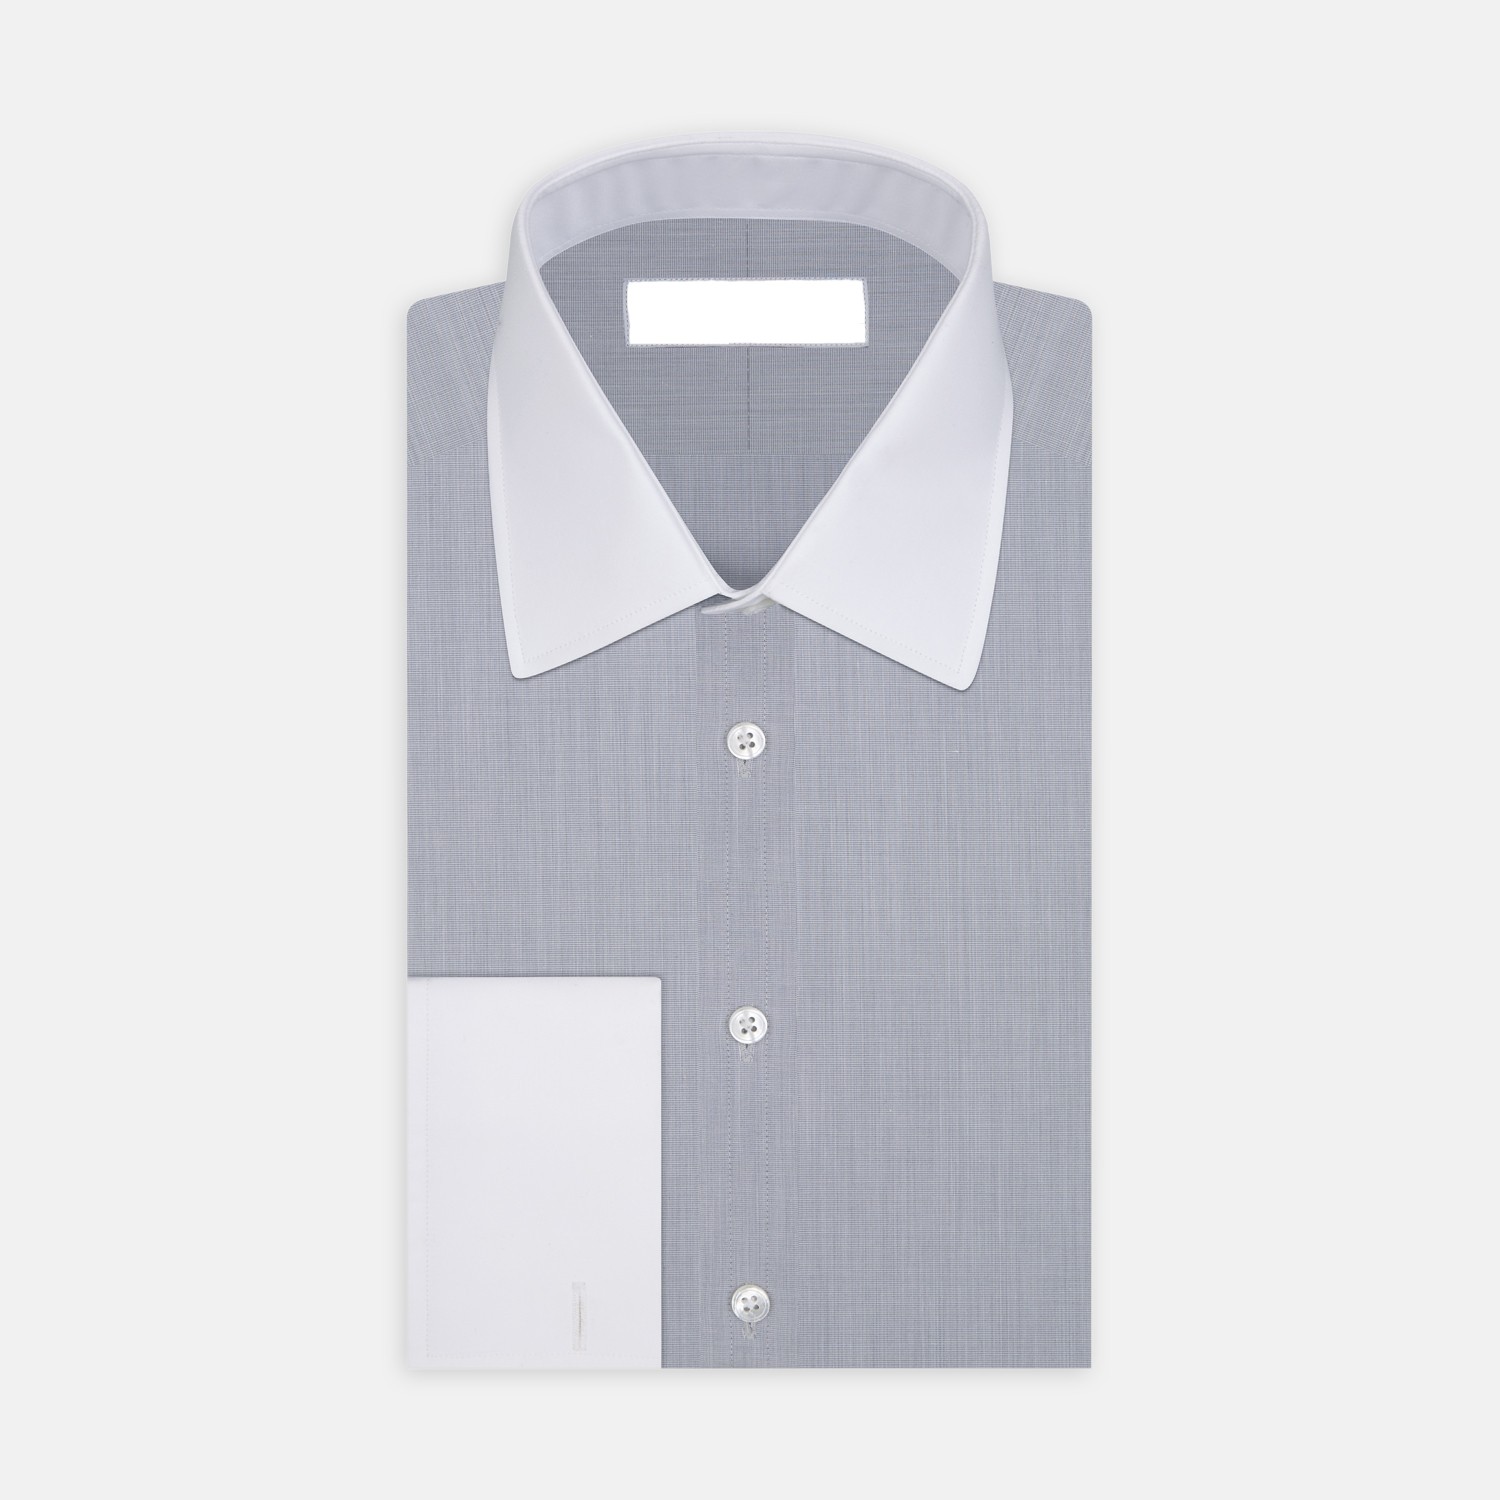 Business Shirt - Mens 100% Cotton 